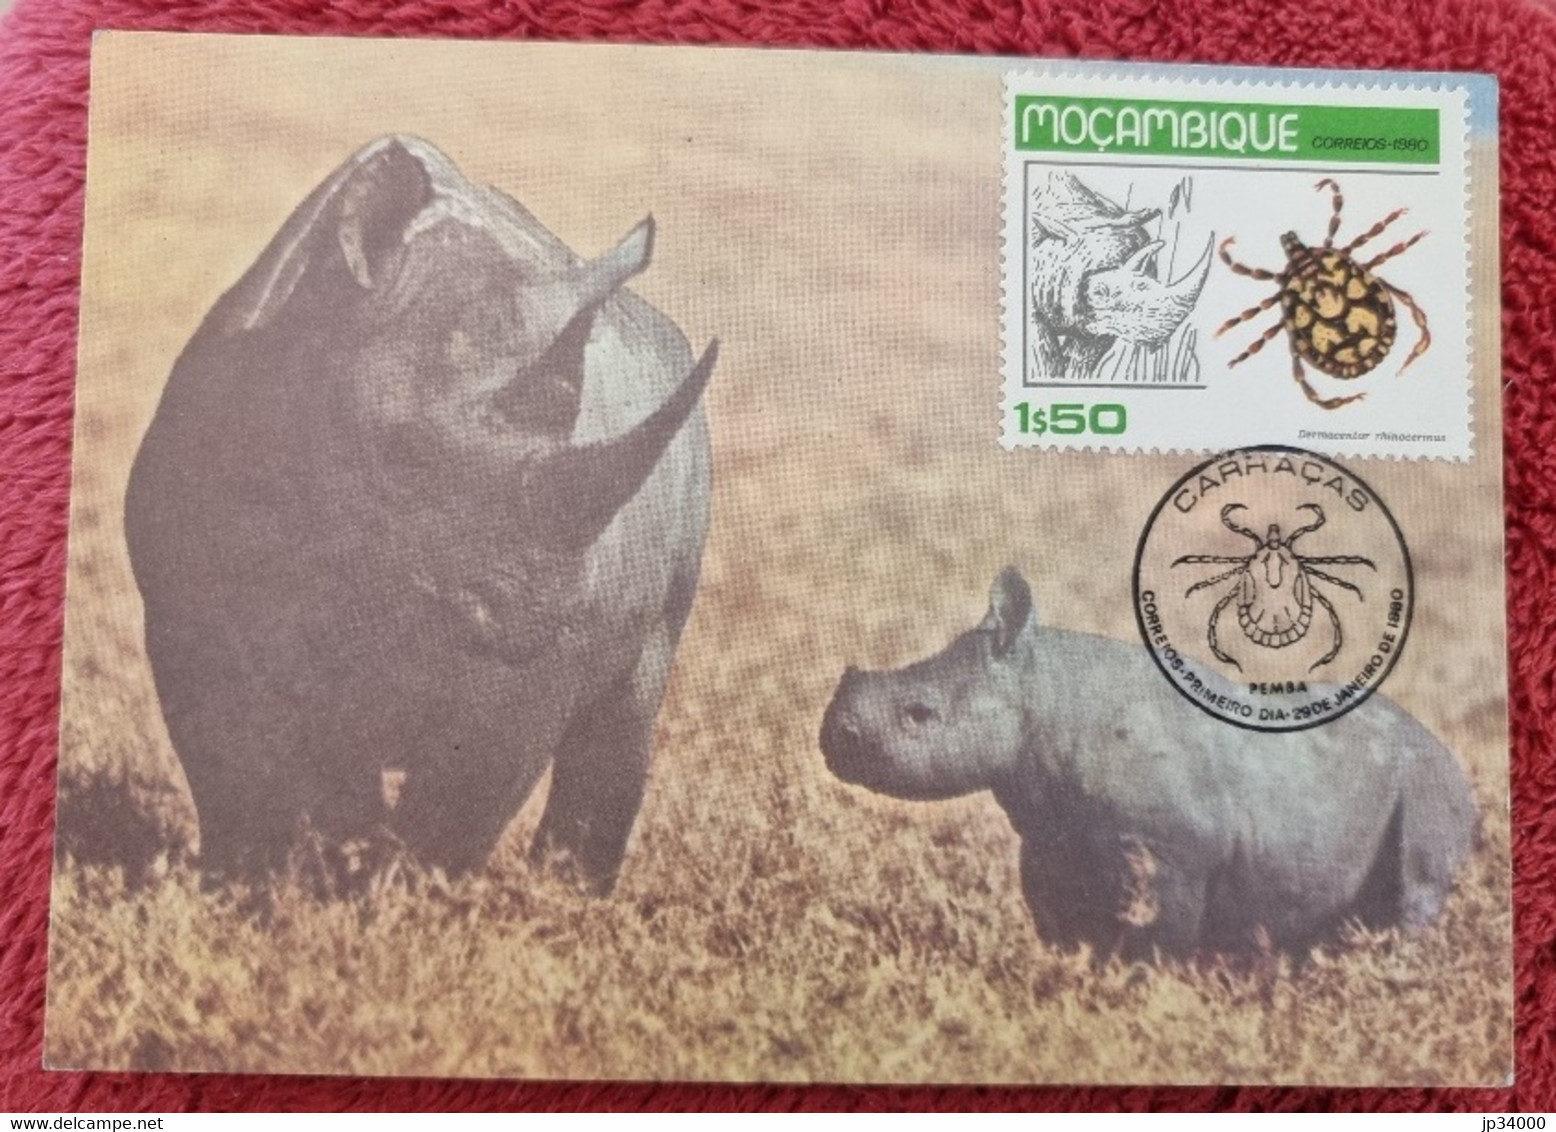 MOZAMBIQUE  Rhinocéros, Insectes, Tique, Yvert N° 732 FDC, 1er Jour, Carte Maximum 1980 - Rhinoceros